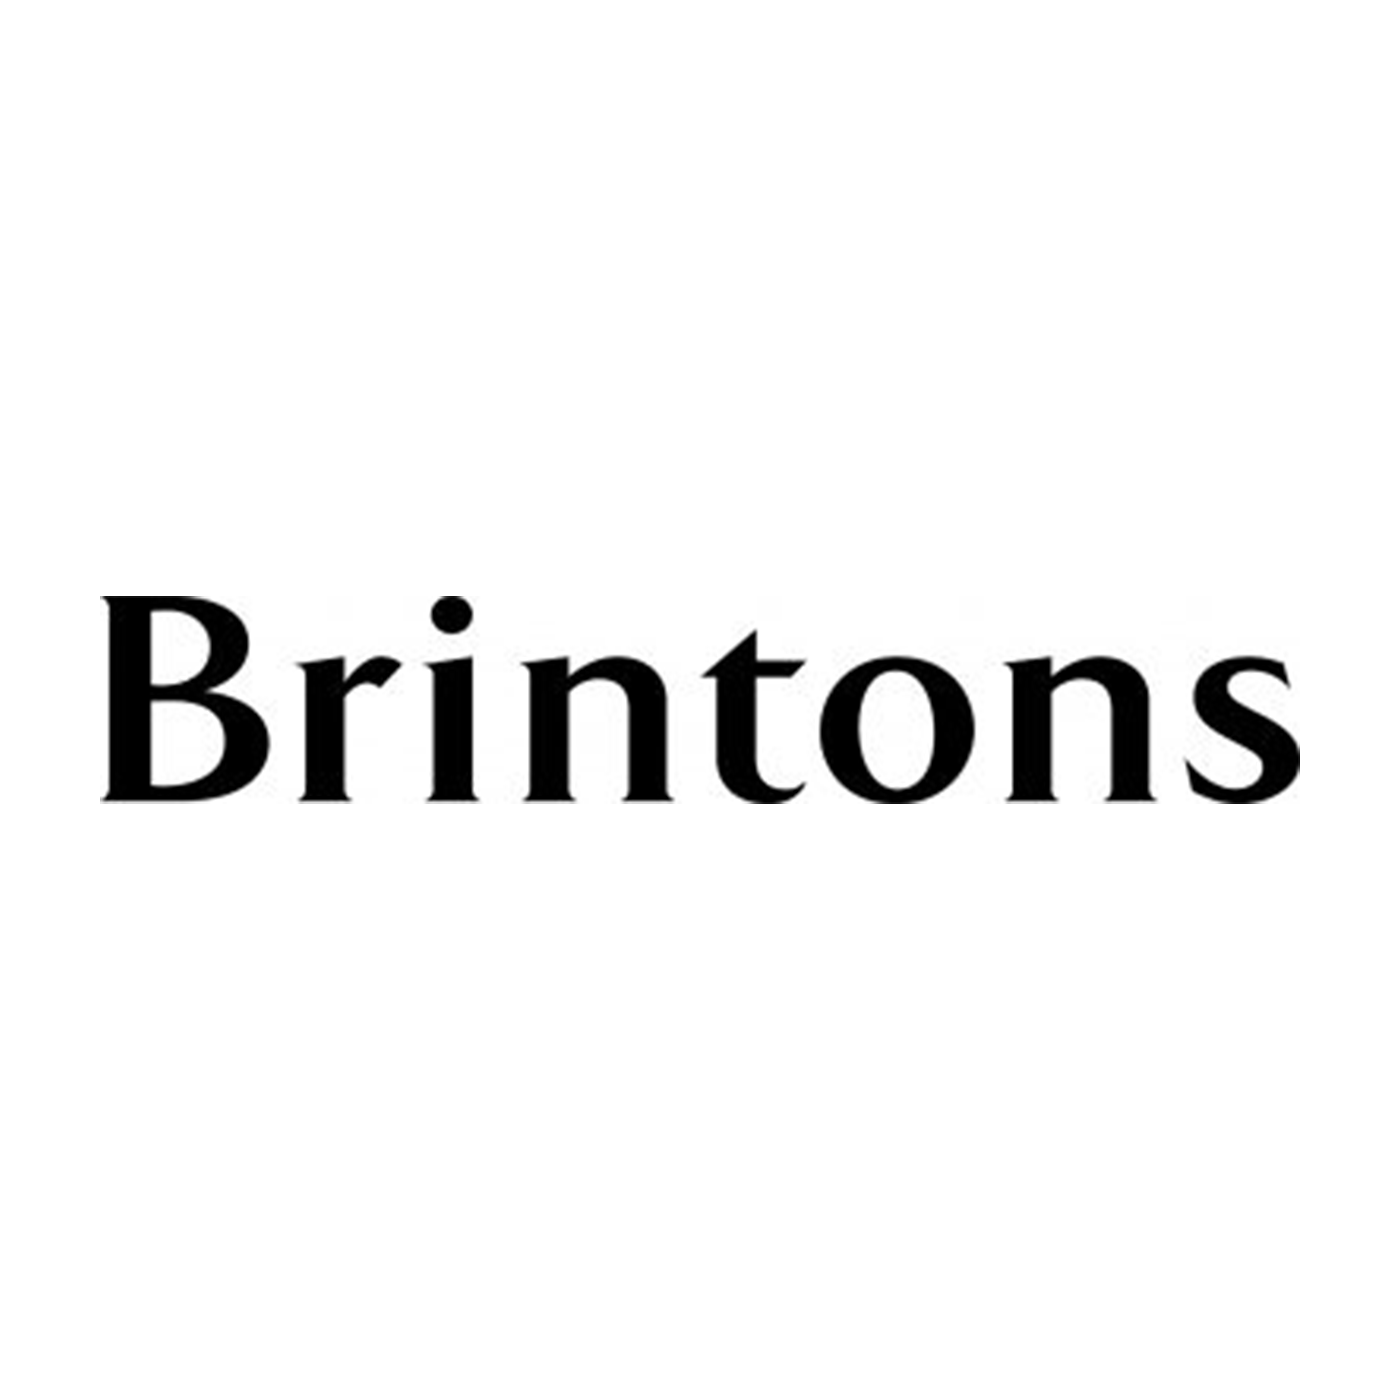 Brintons